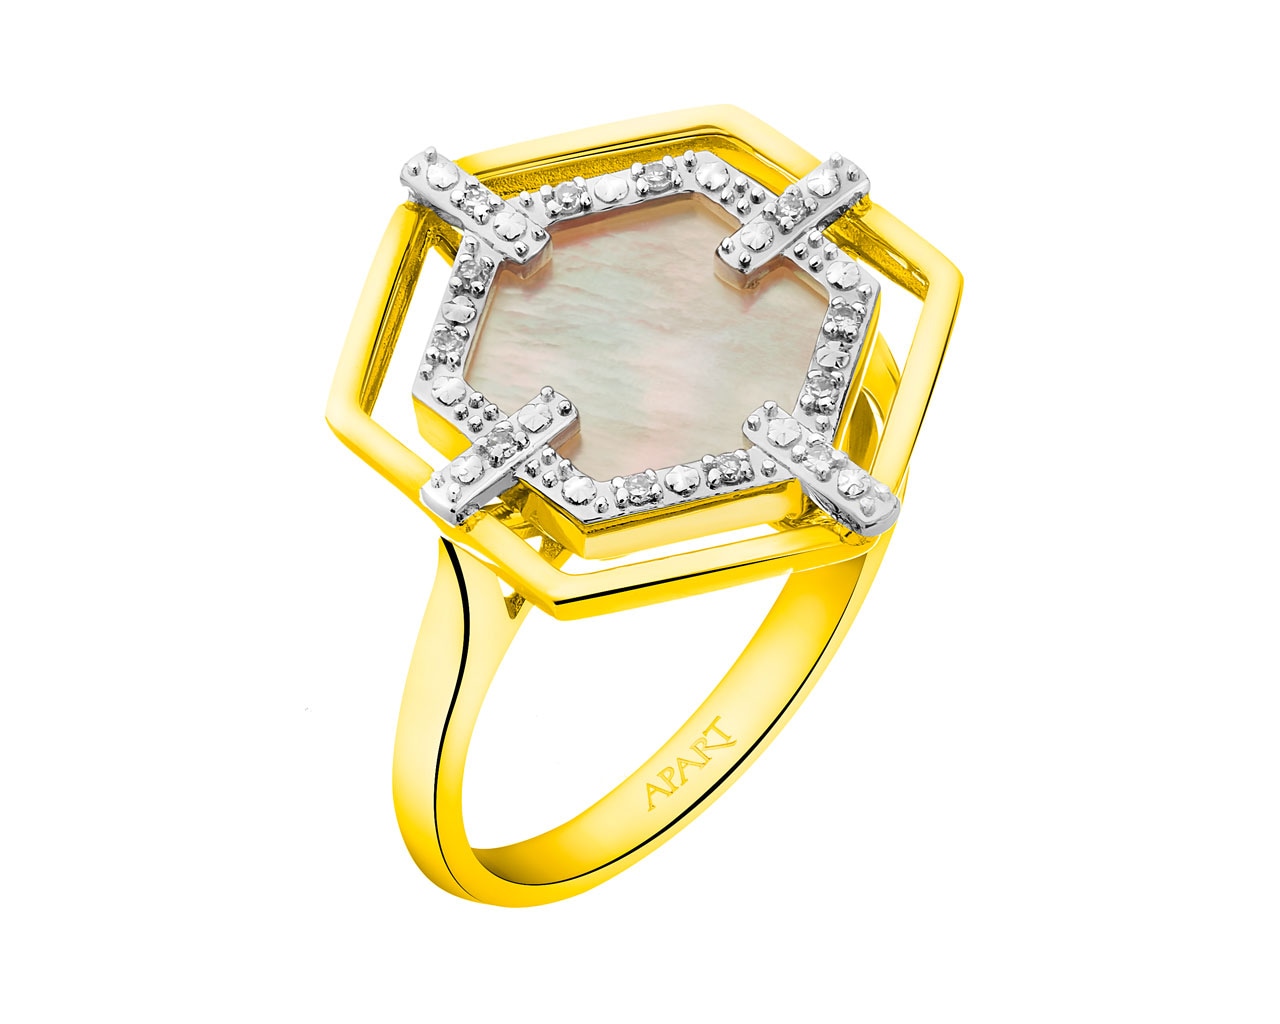 Zlatý prsten s diamanty a perletí 0,03 ct - ryzost 585